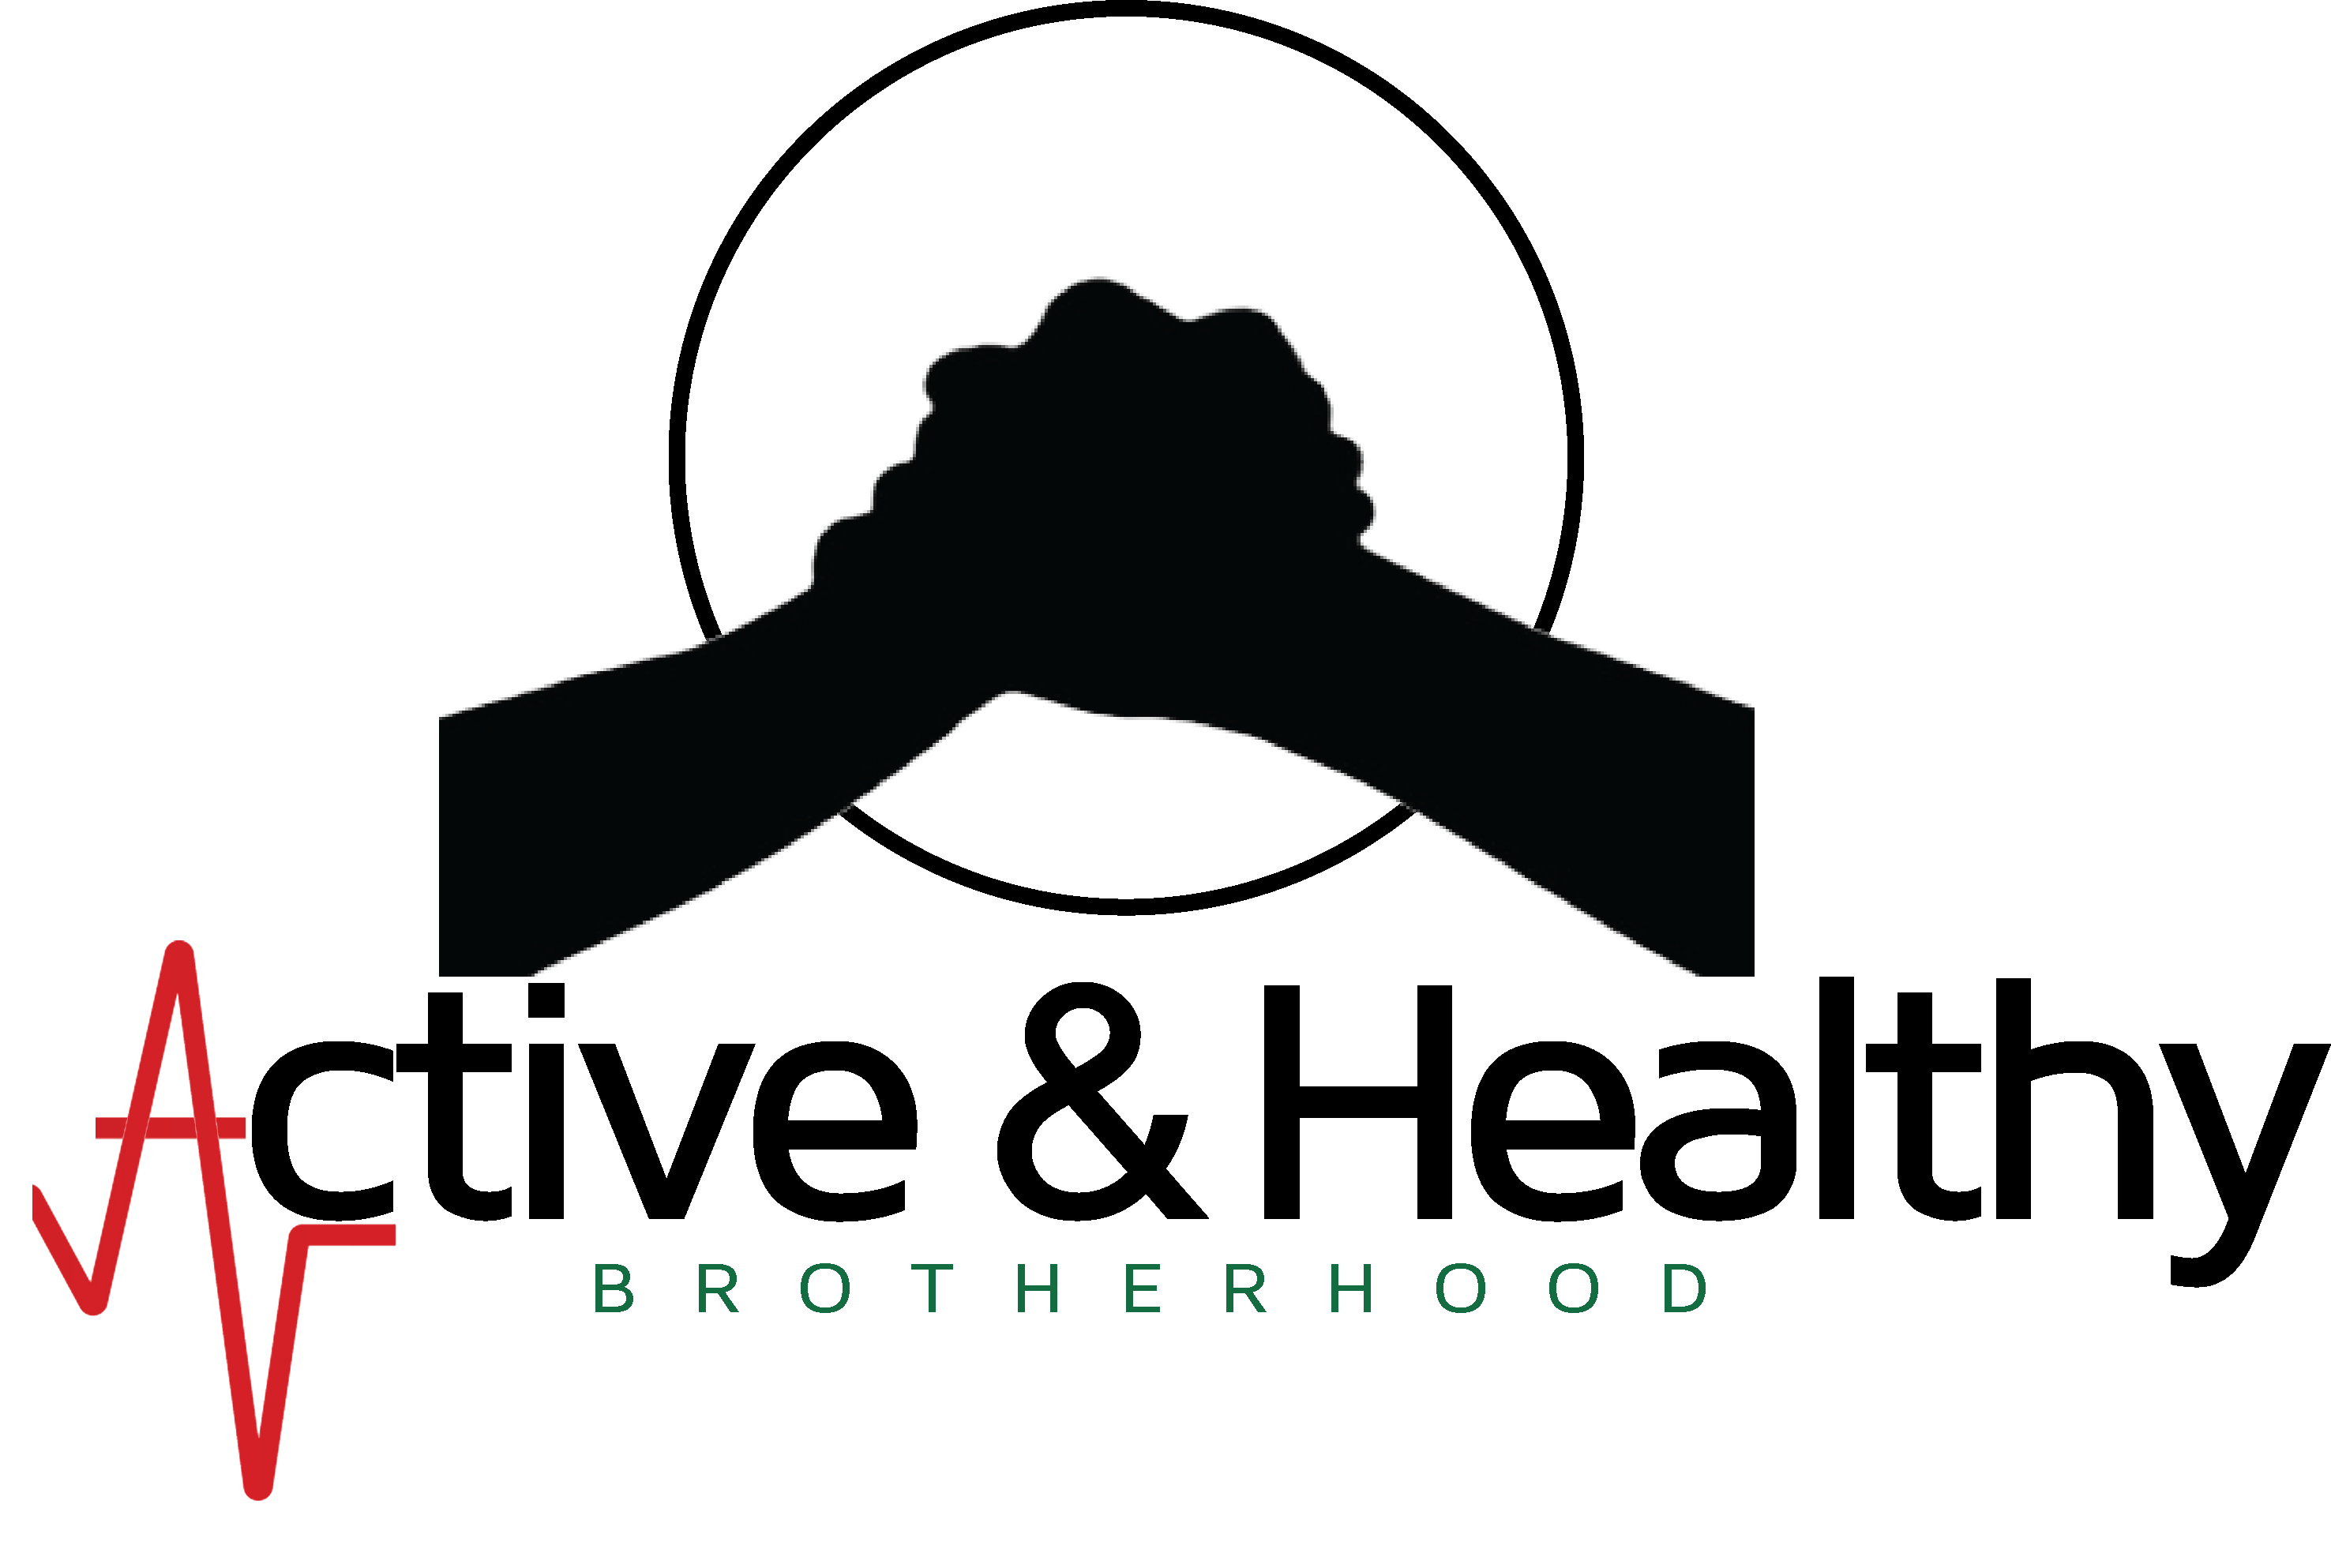 Brotherhood Logo - Active & Healthy Brotherhood. Gramercy Research Group